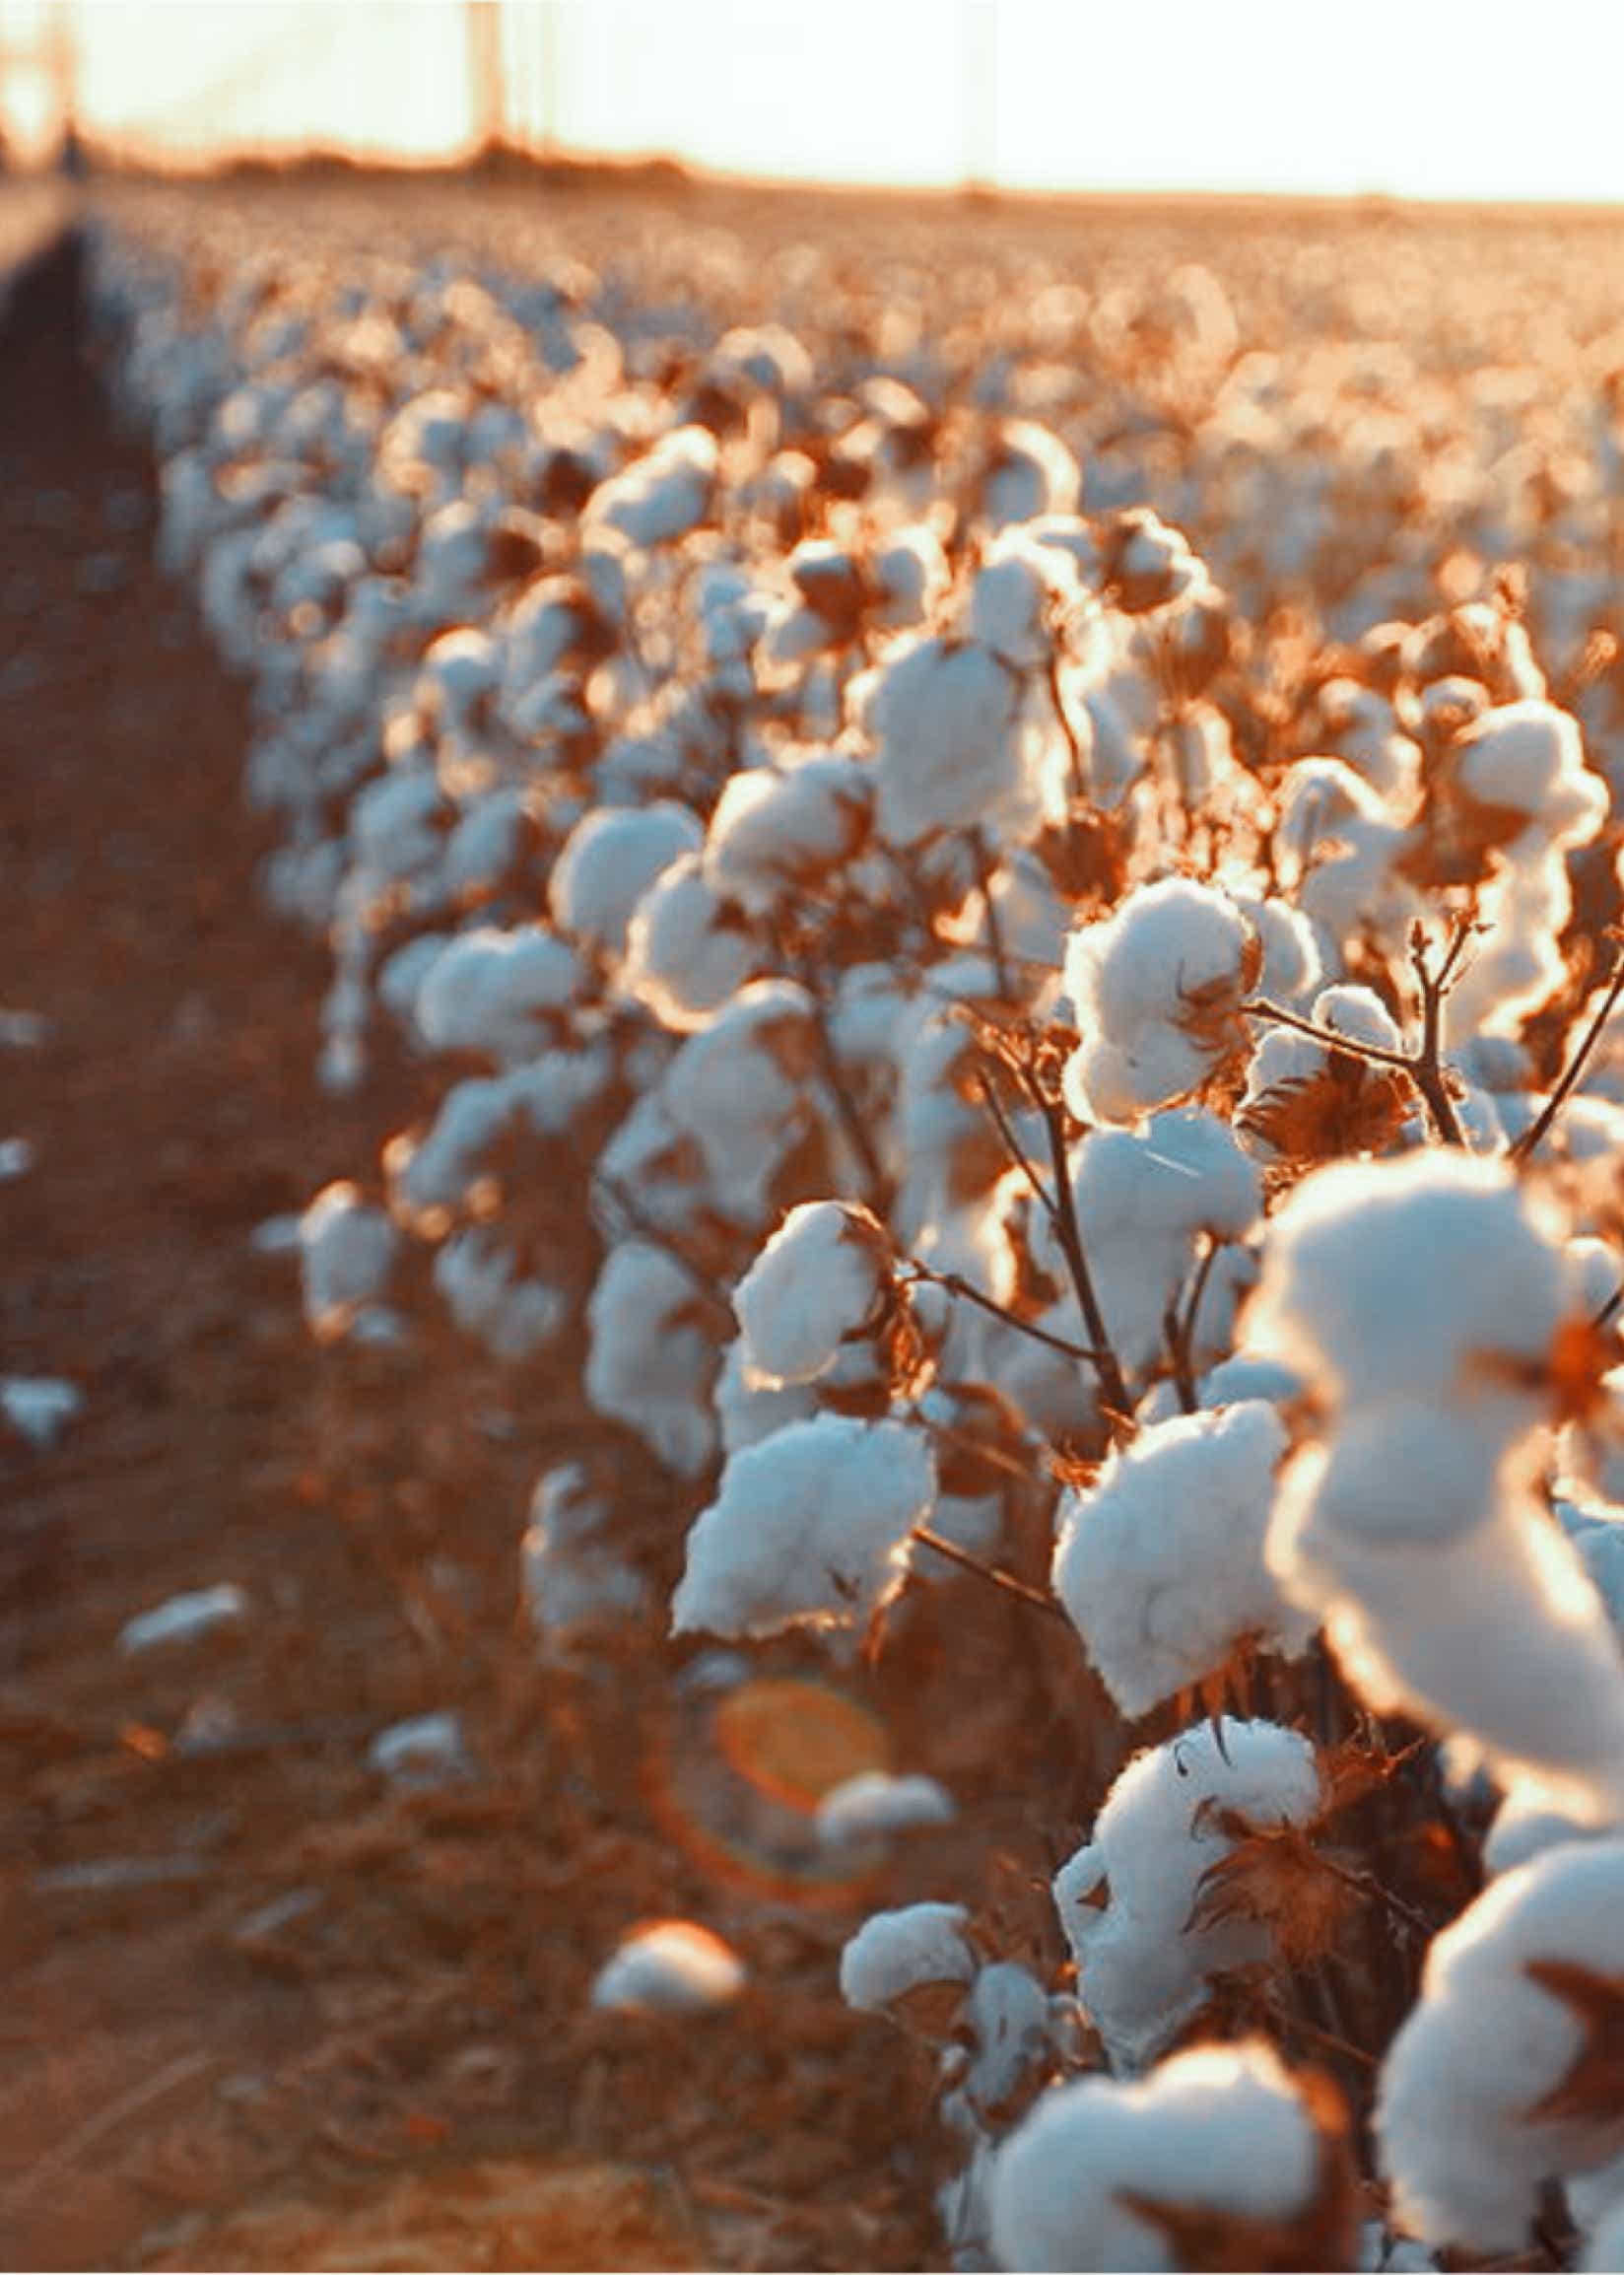 cotton farm for acetate